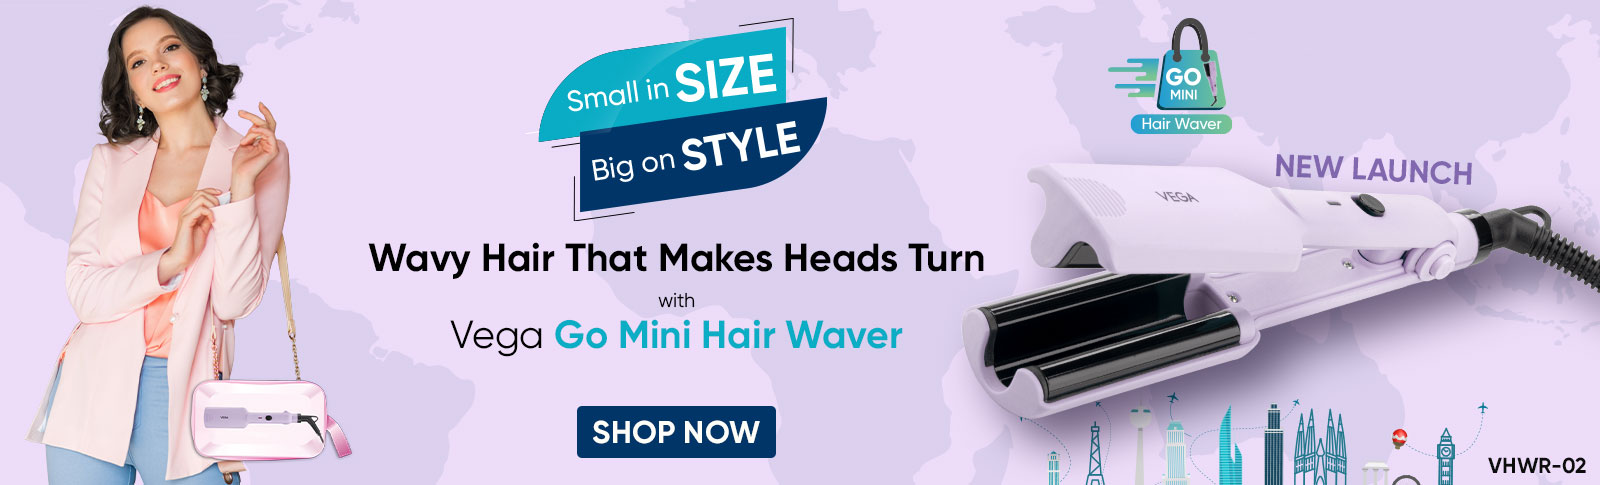 Vega Go Mini Hair Waver